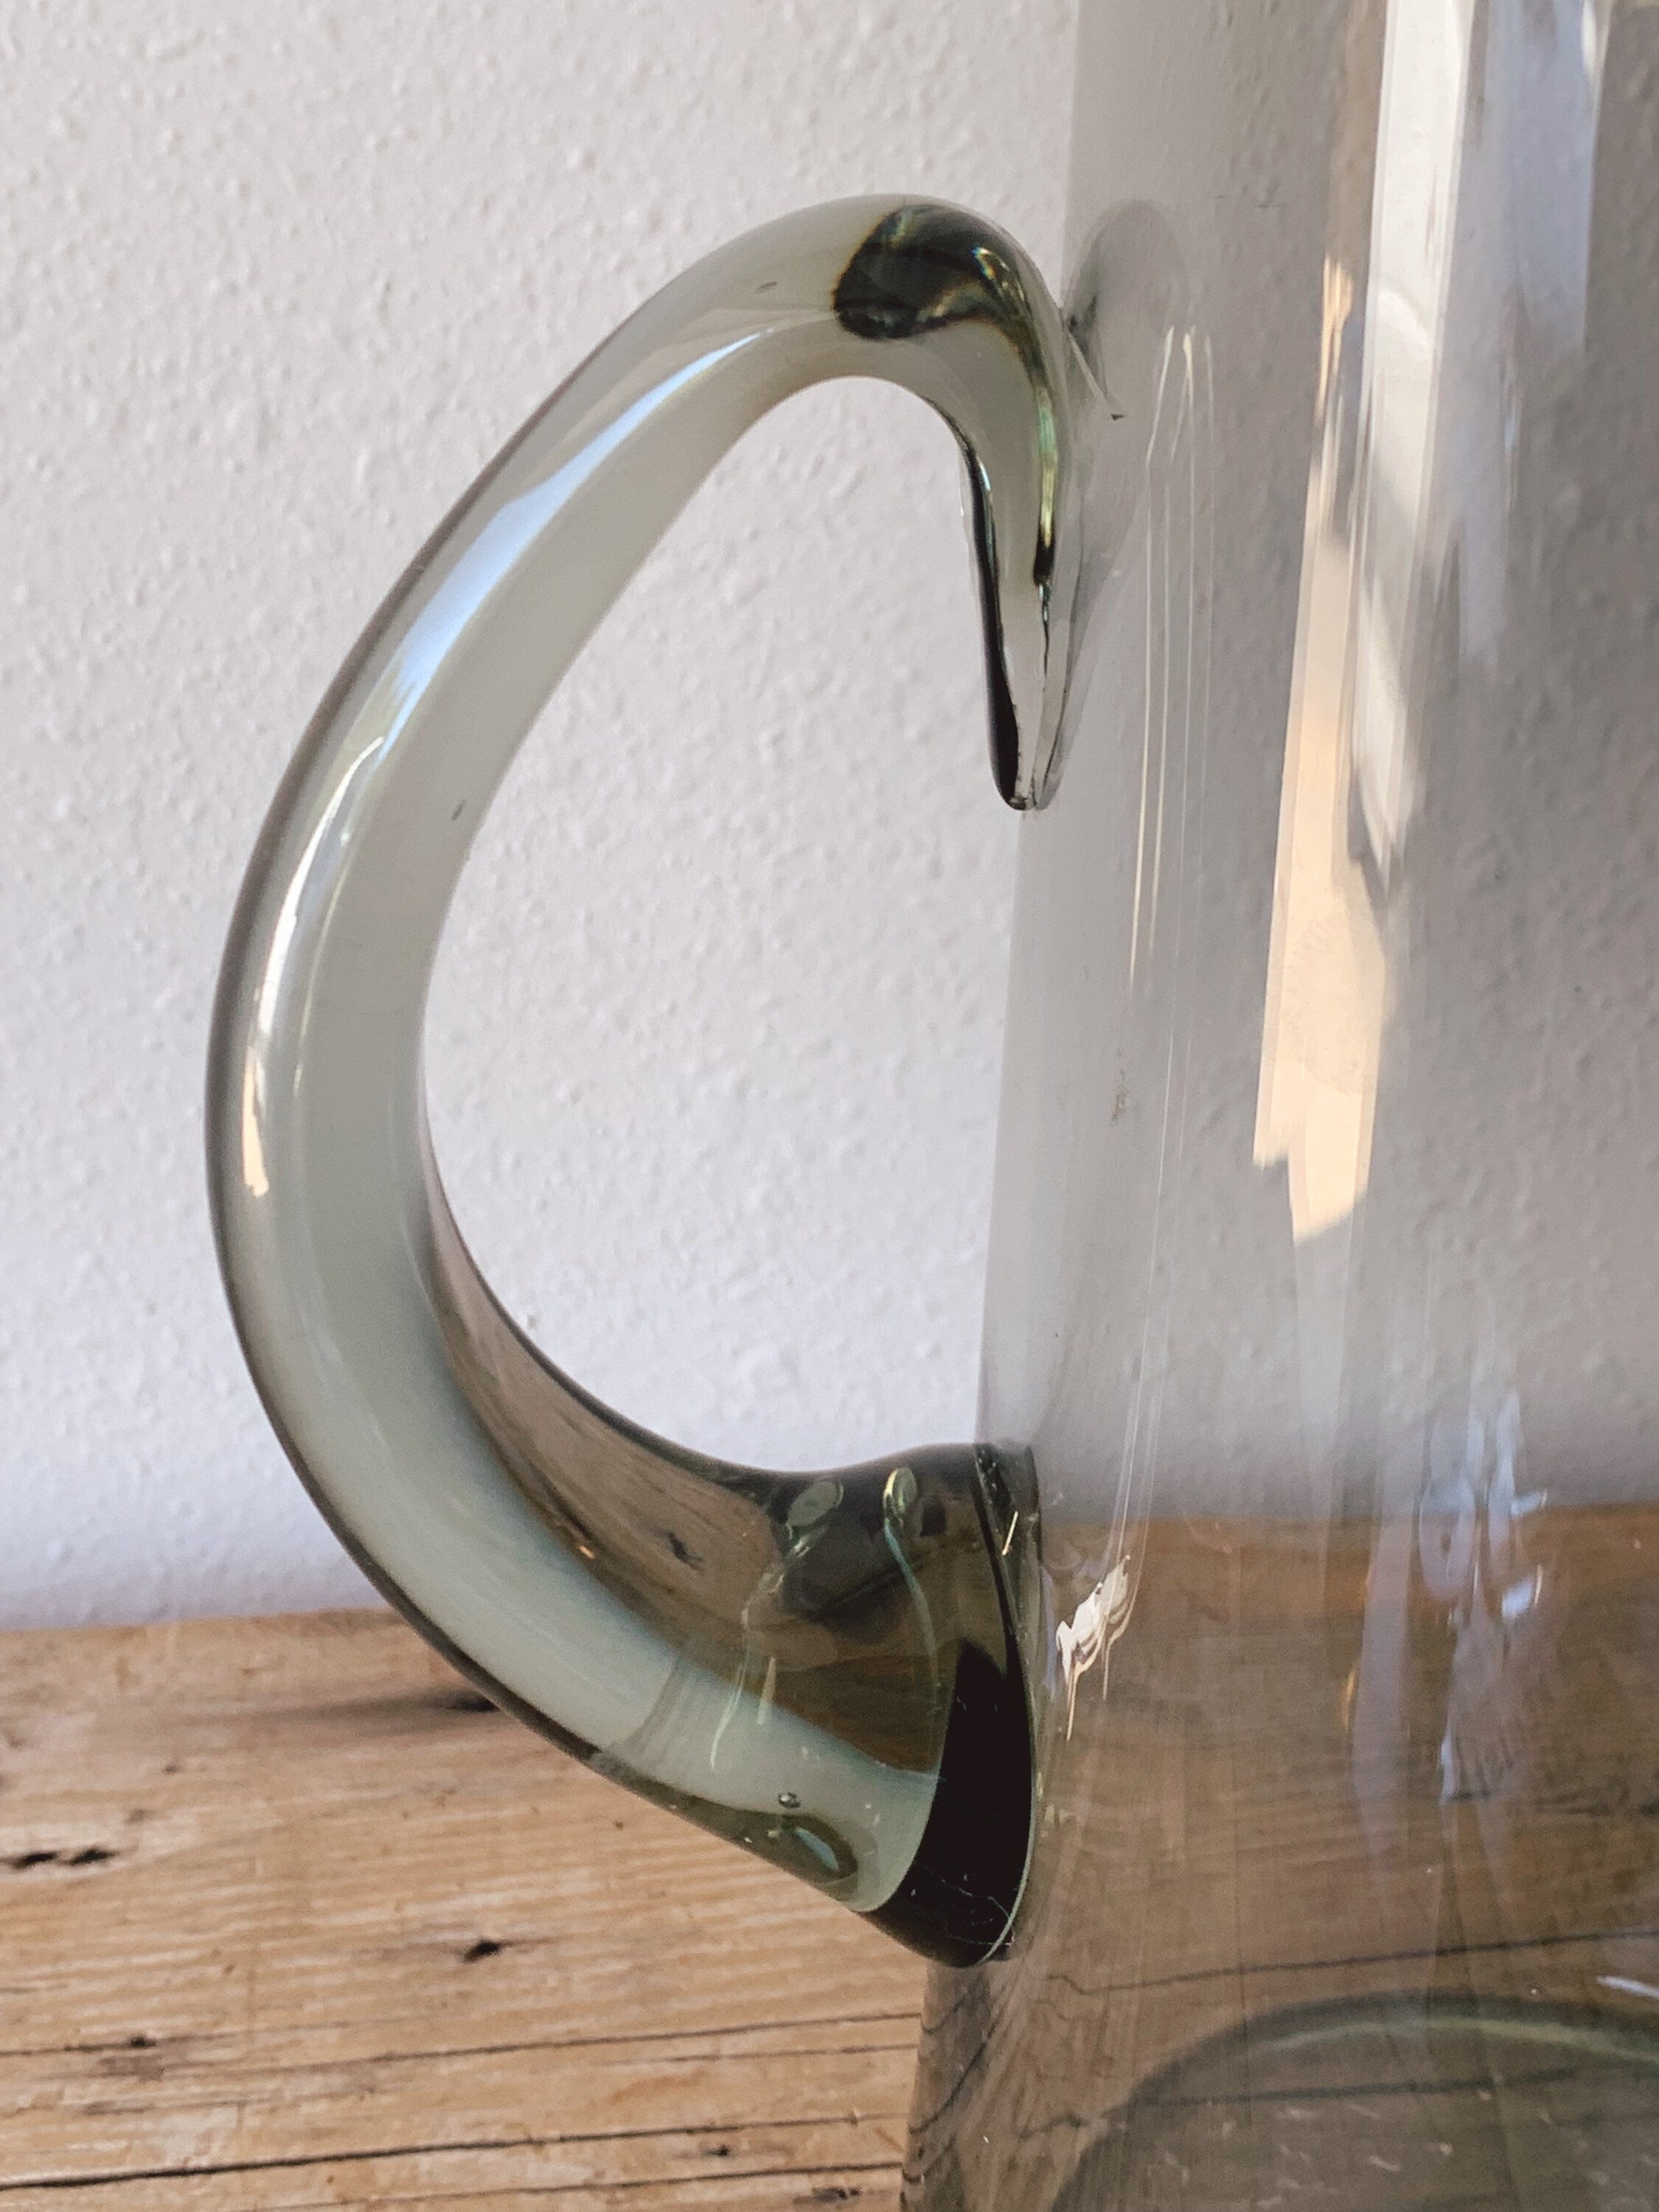 Vintage 1956 Holmgaard Smoked Glass Martini Pitcher by Per Luken | Mid Century Barware Made in Denmark | Tall Water Carafe Flower Vase